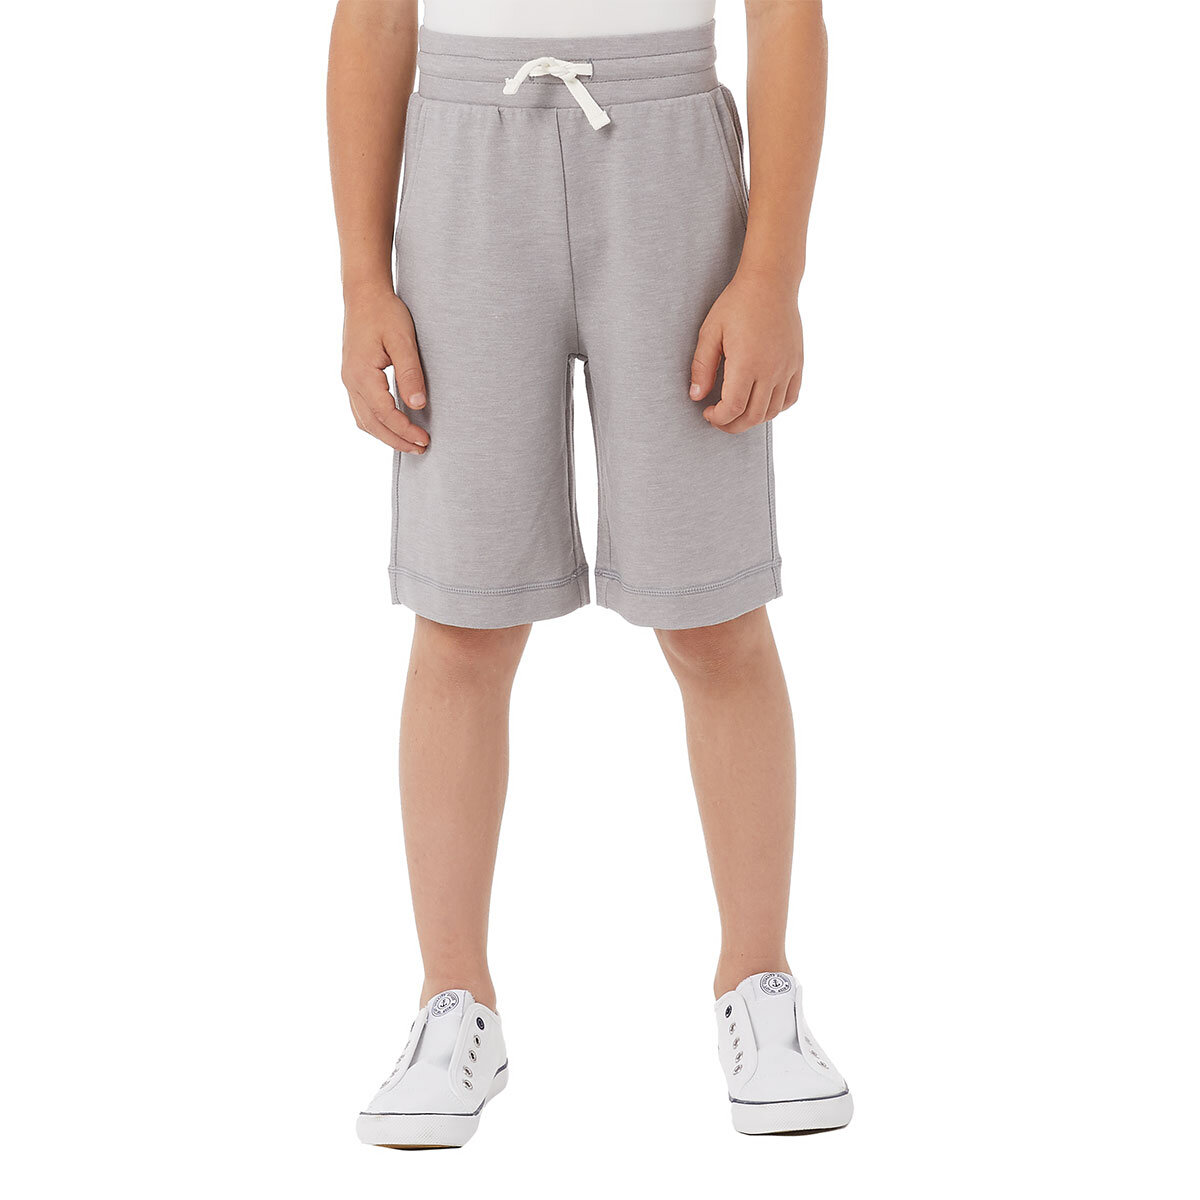 image of front of dark grey shorts